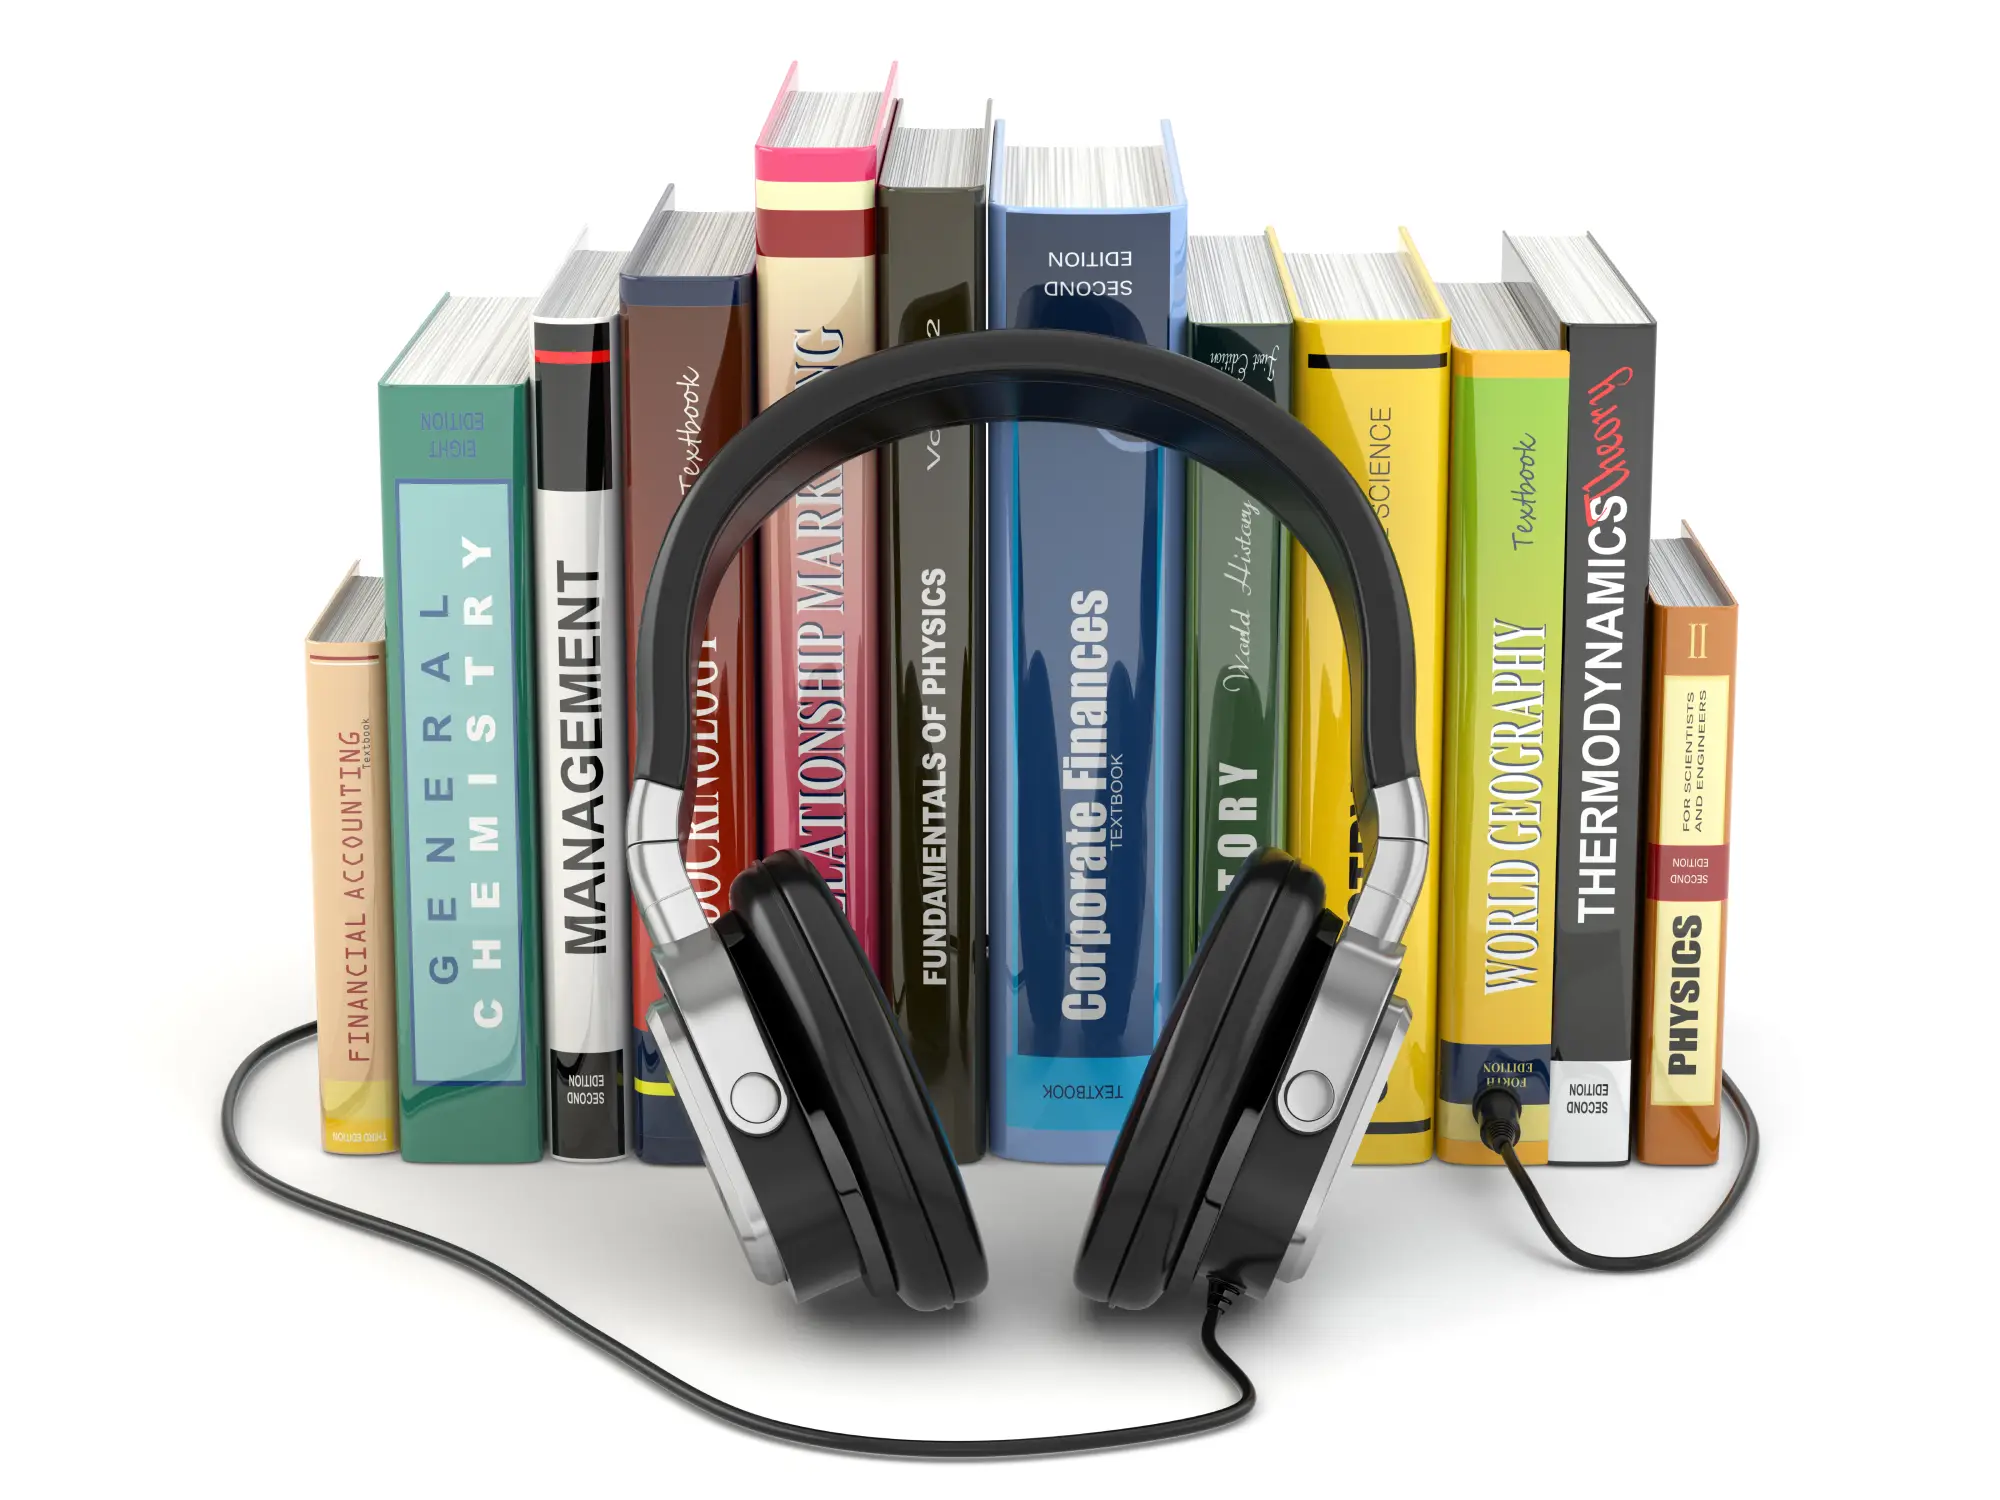 audiobook-concept-headphones-books-white-isolated-background